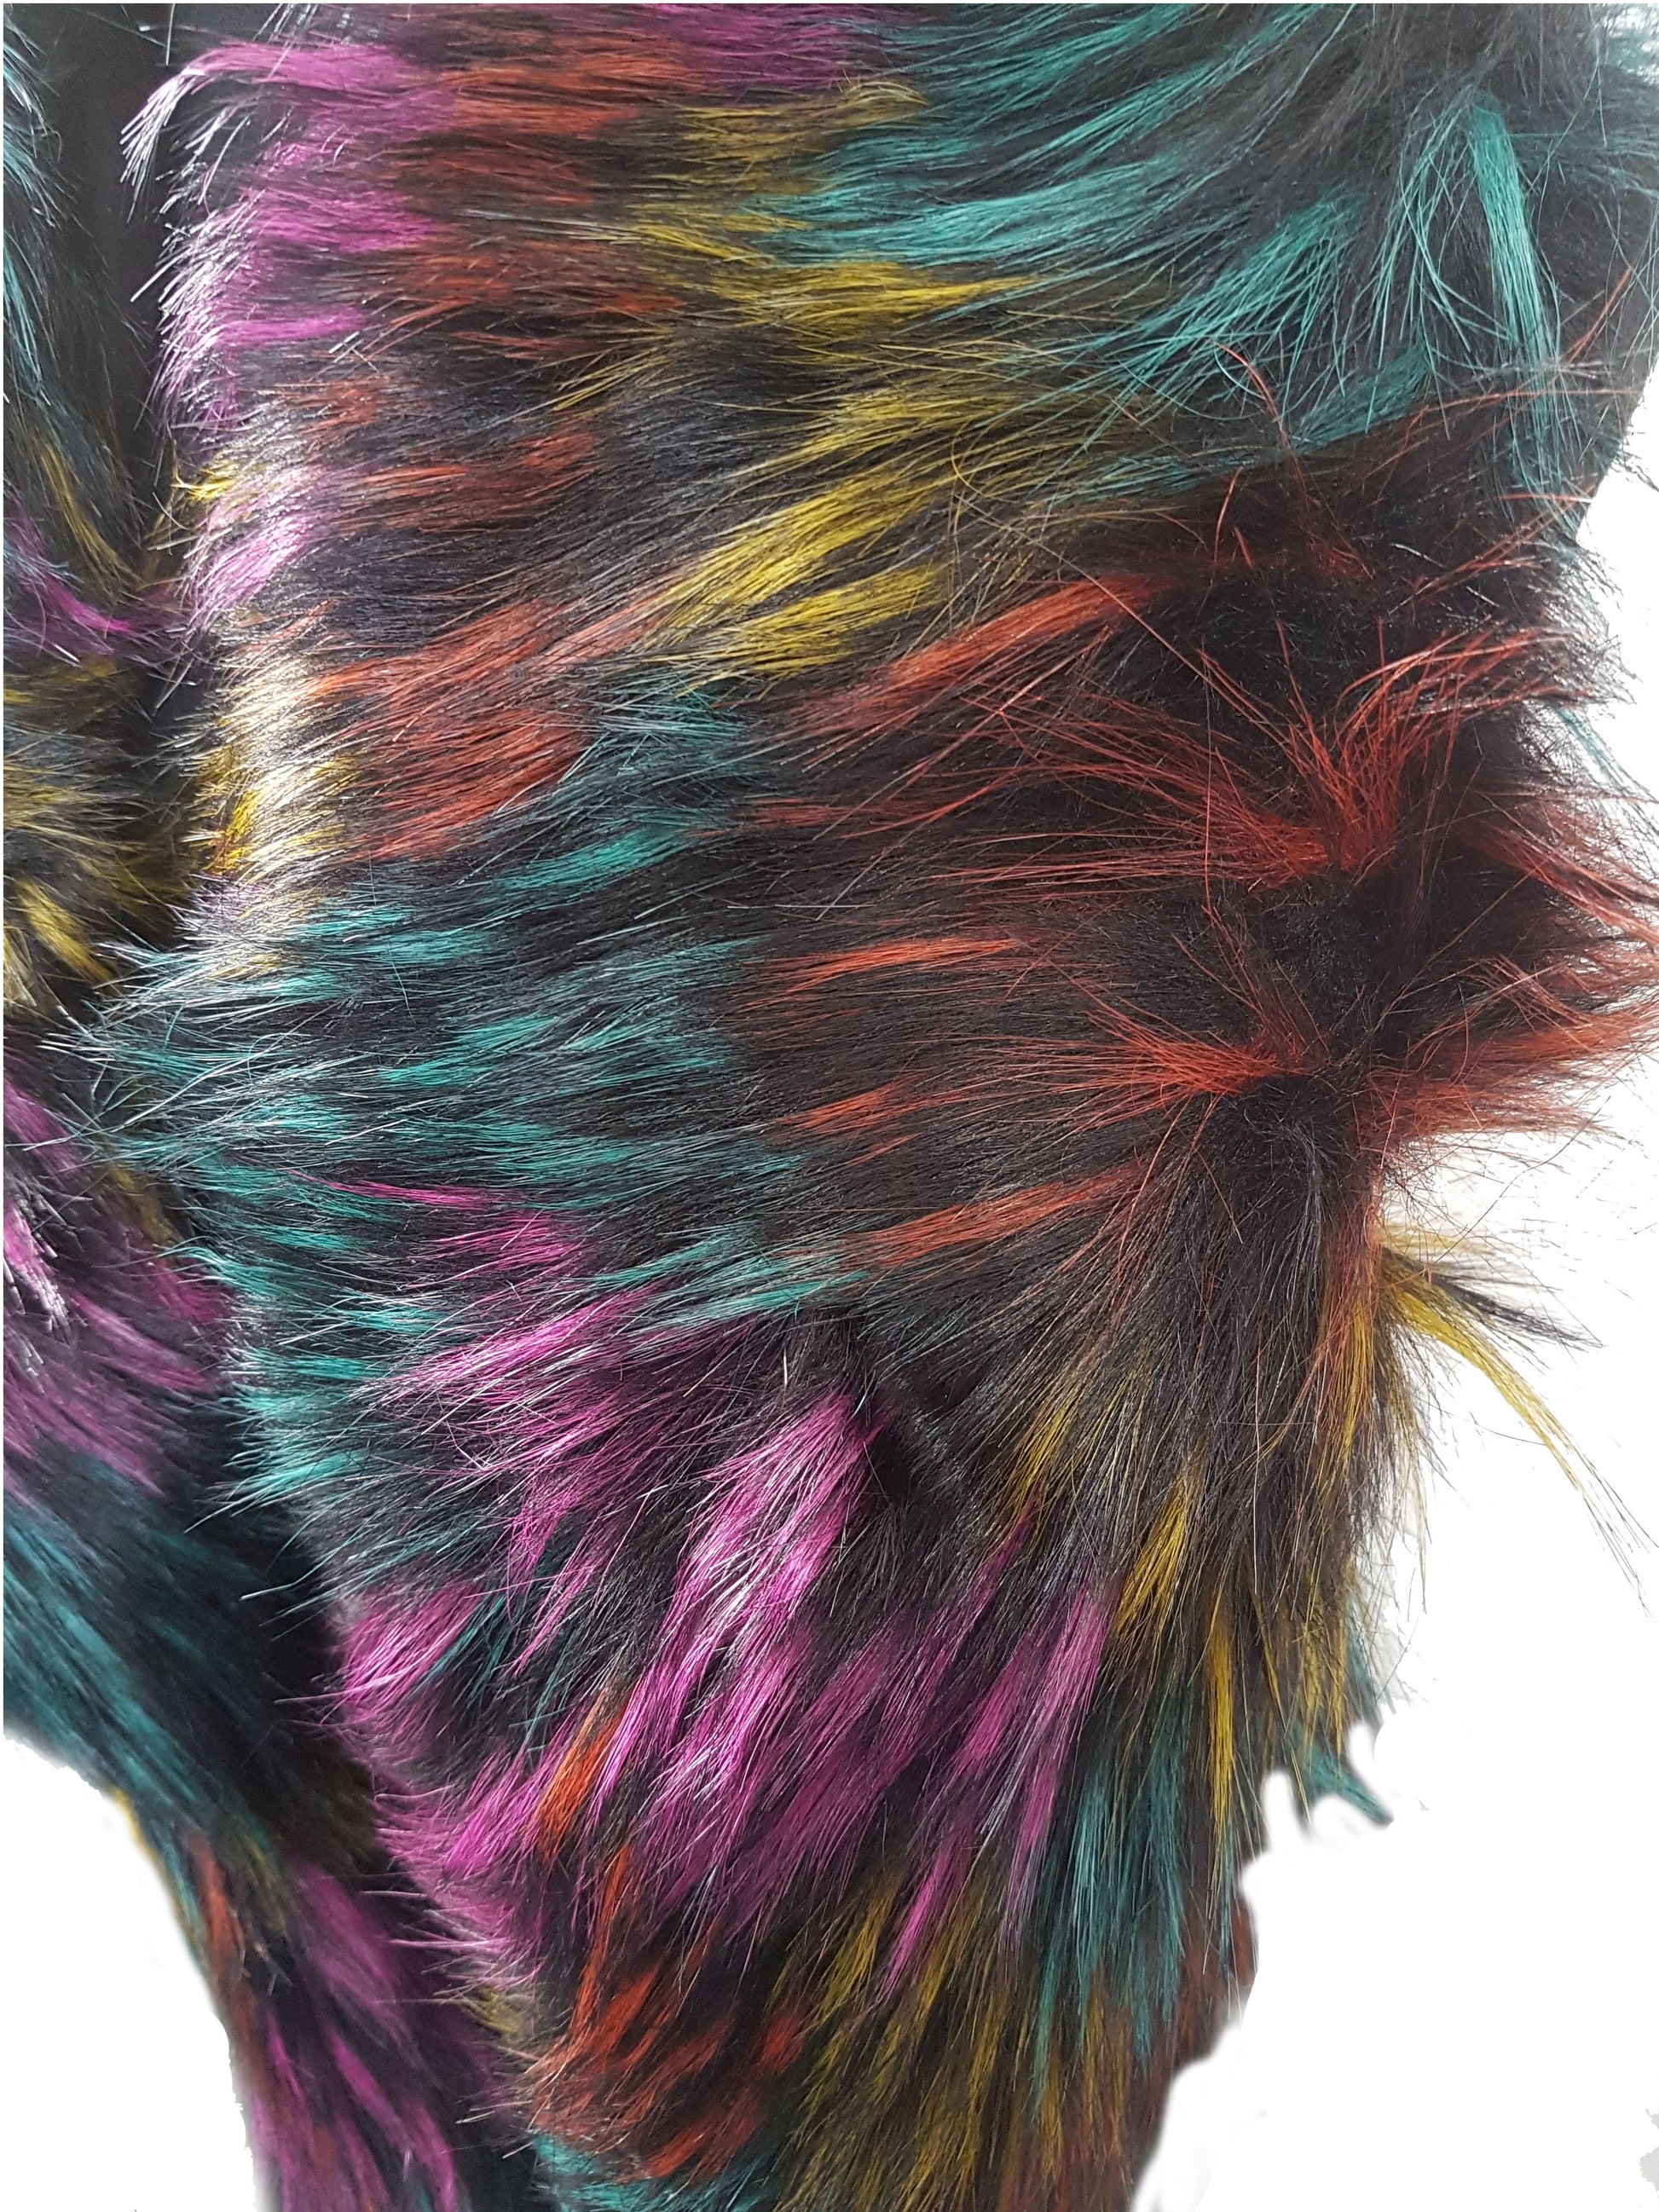 Lydia Winter Multicoloured Faux Fur Wrap Neck Warmer